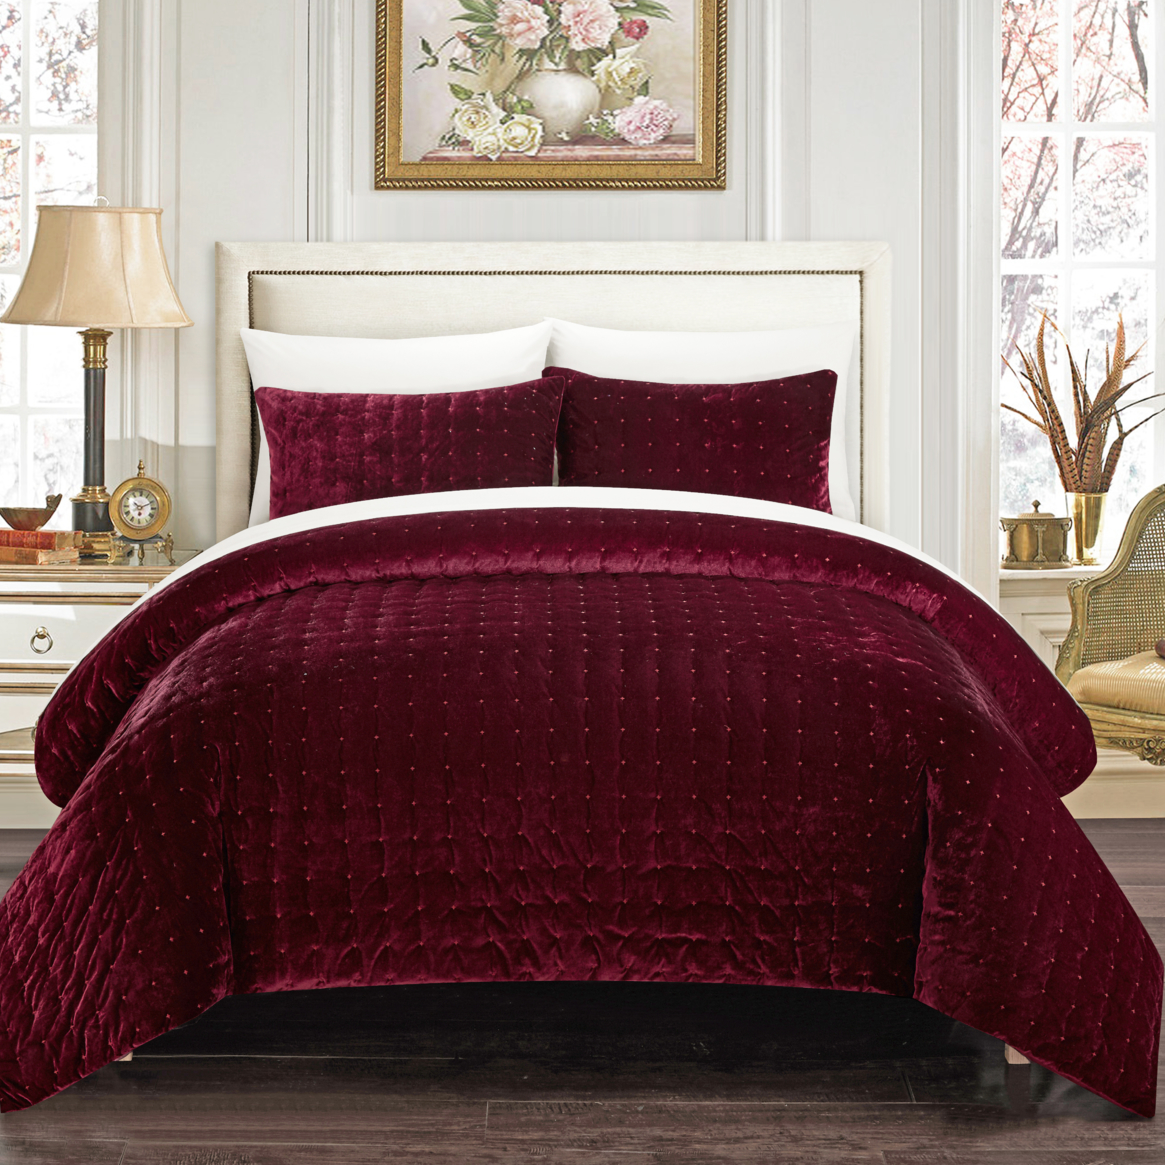 Chaya 7 Piece Comforter Set Luxurious Hand Stitched Velvet Bed In A Bag Bedding - Burgundy, Queen